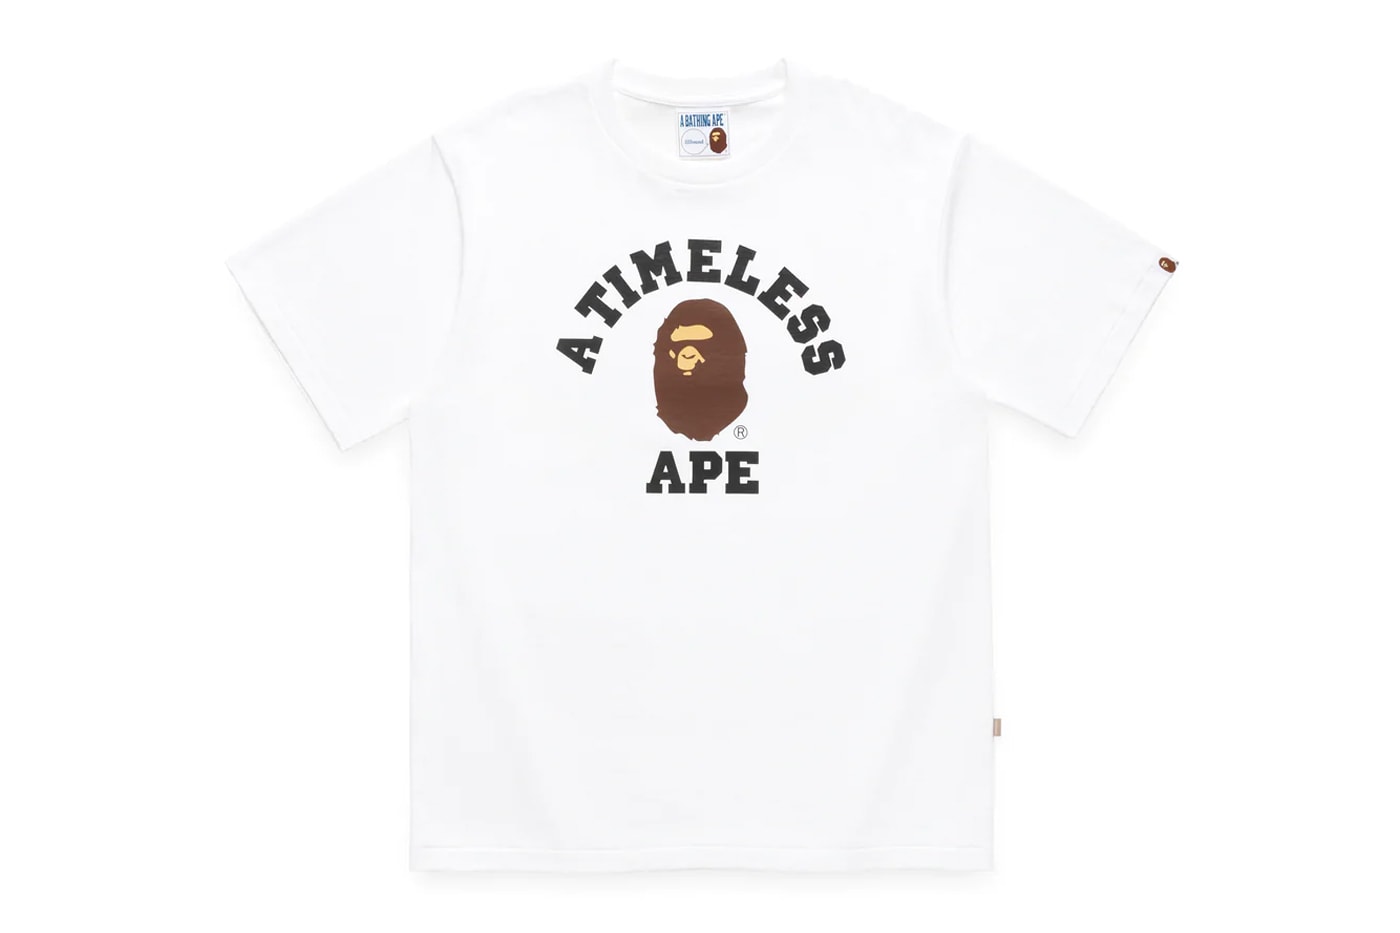 JJJJound Justin saunders bape a bathing ape bold streetwear minimalist archive navy white hoodie sweatpant t shirt mesh cap release info date price